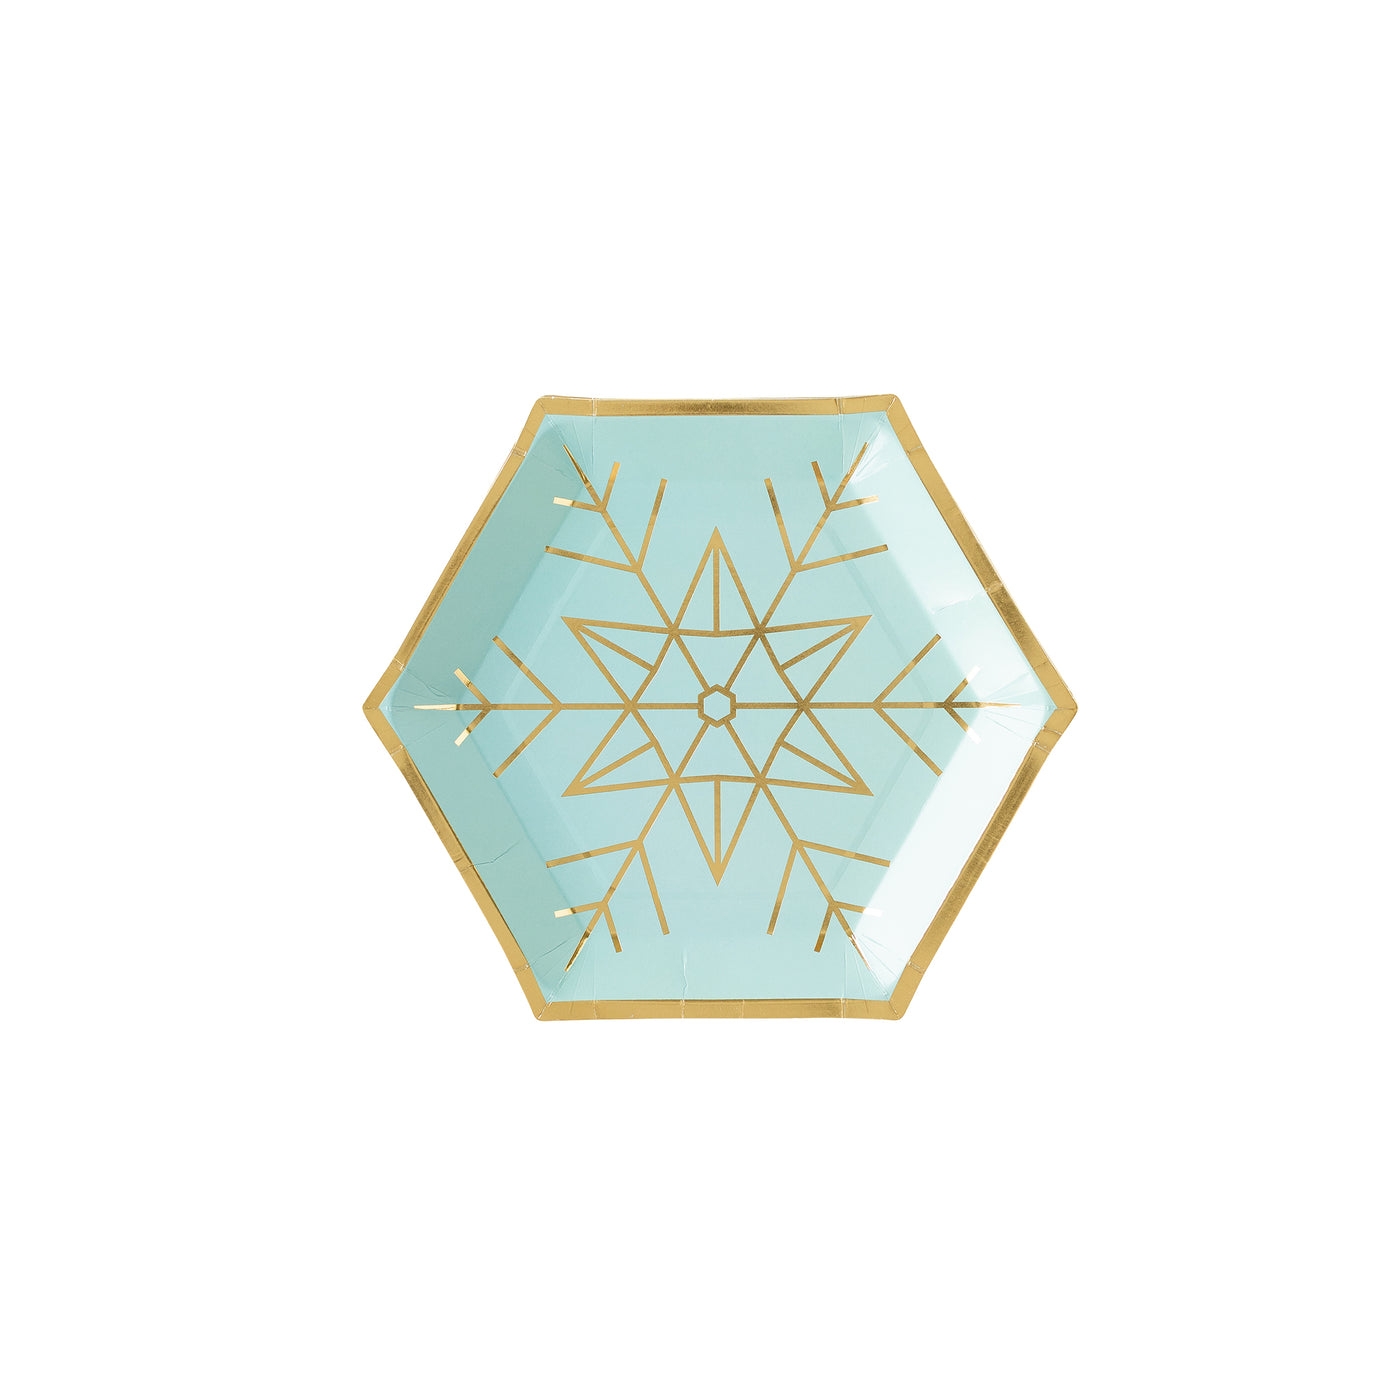 PLTS394C - Bright Snowflake Paper Plate Set